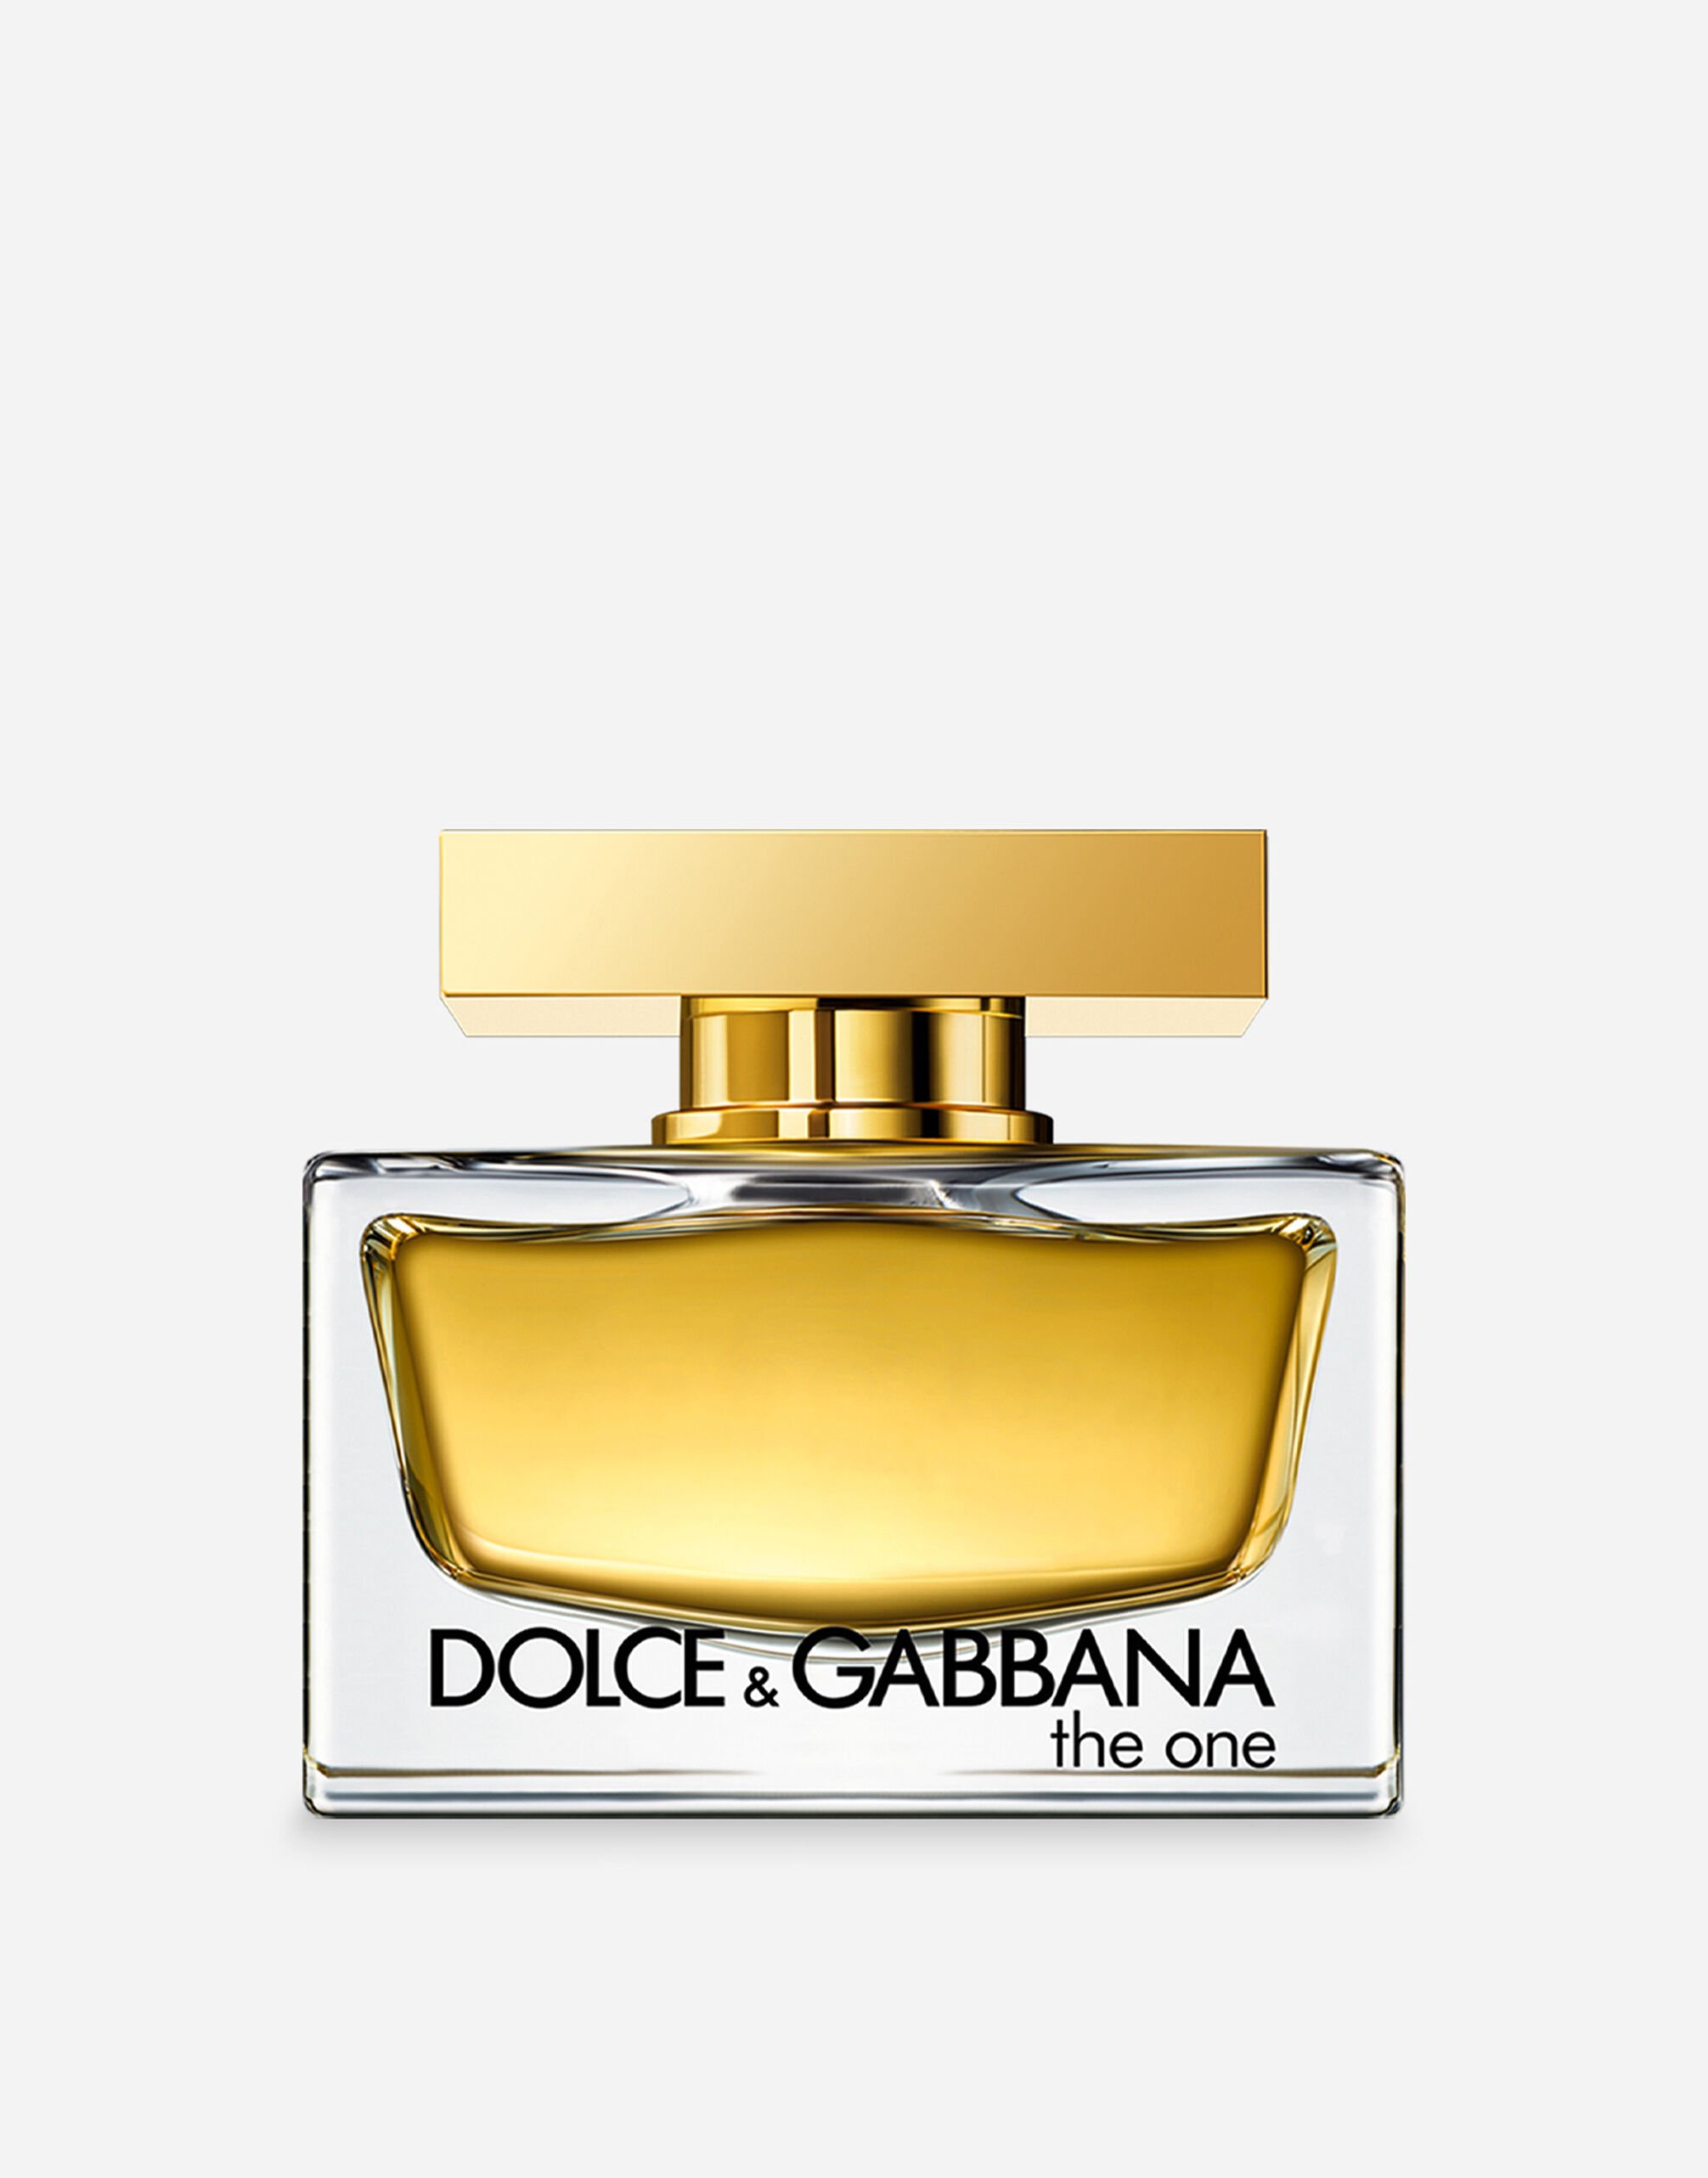 Dolce & Gabbana The One Eau de Parfum - VP001UVP000